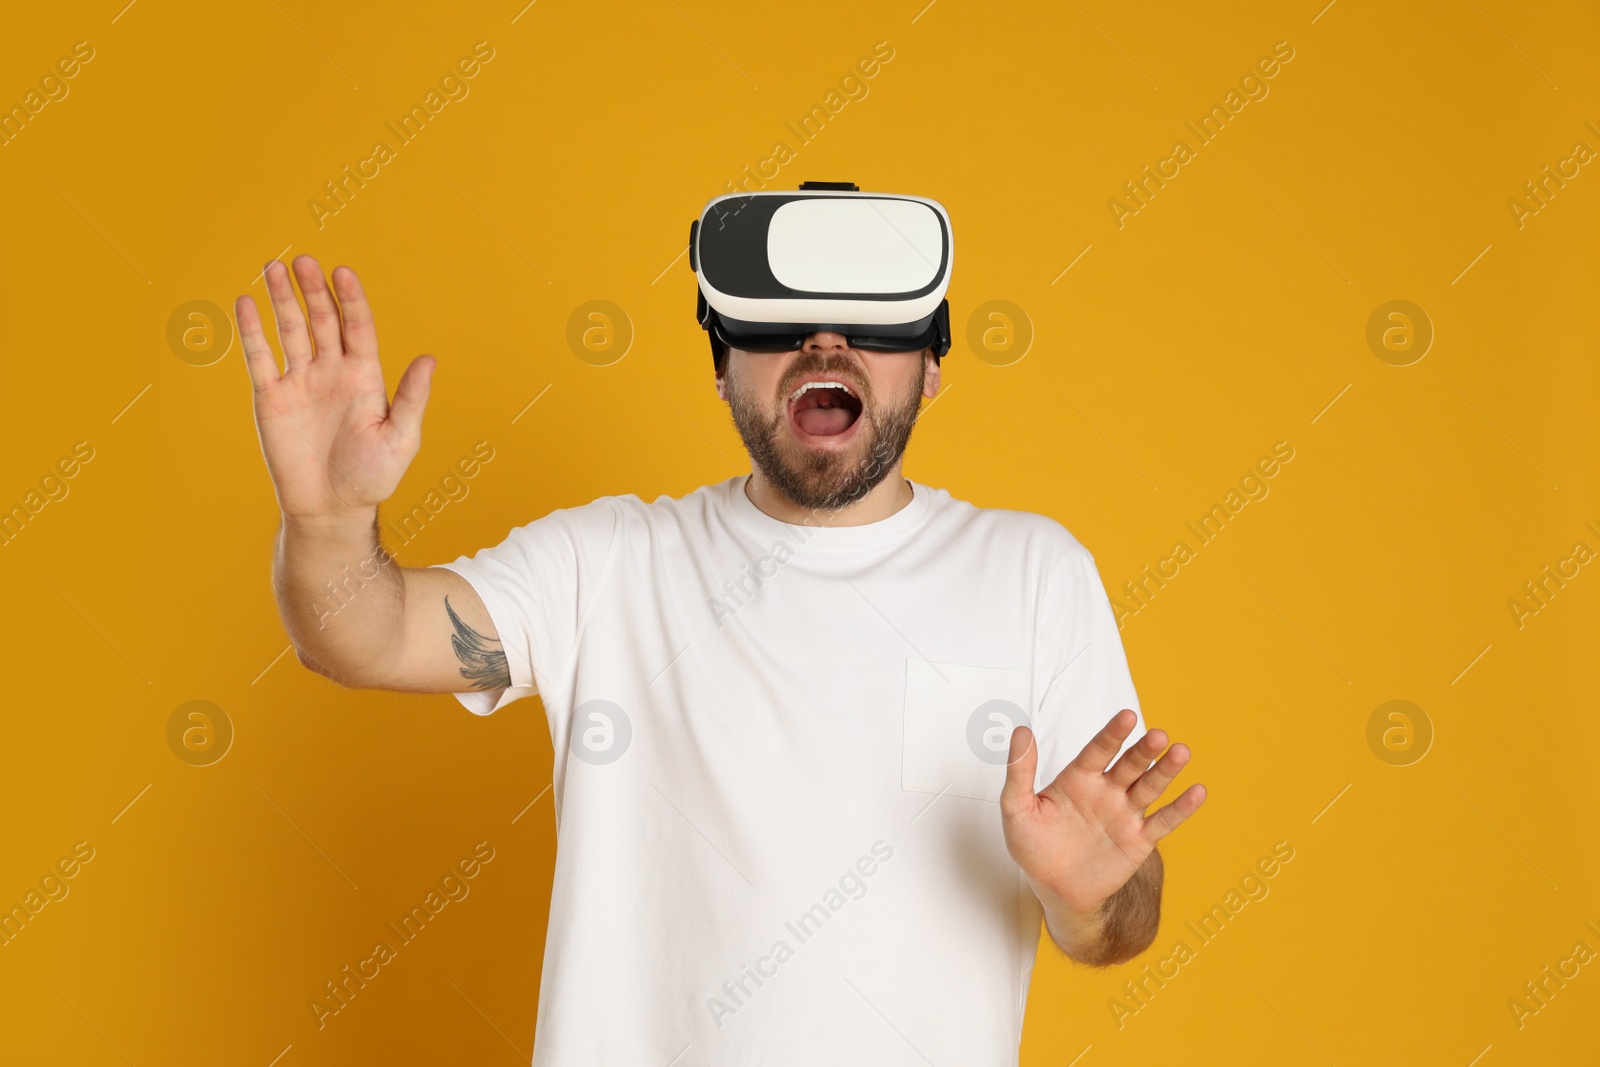 Photo of Emotional man using virtual reality headset on yellow background